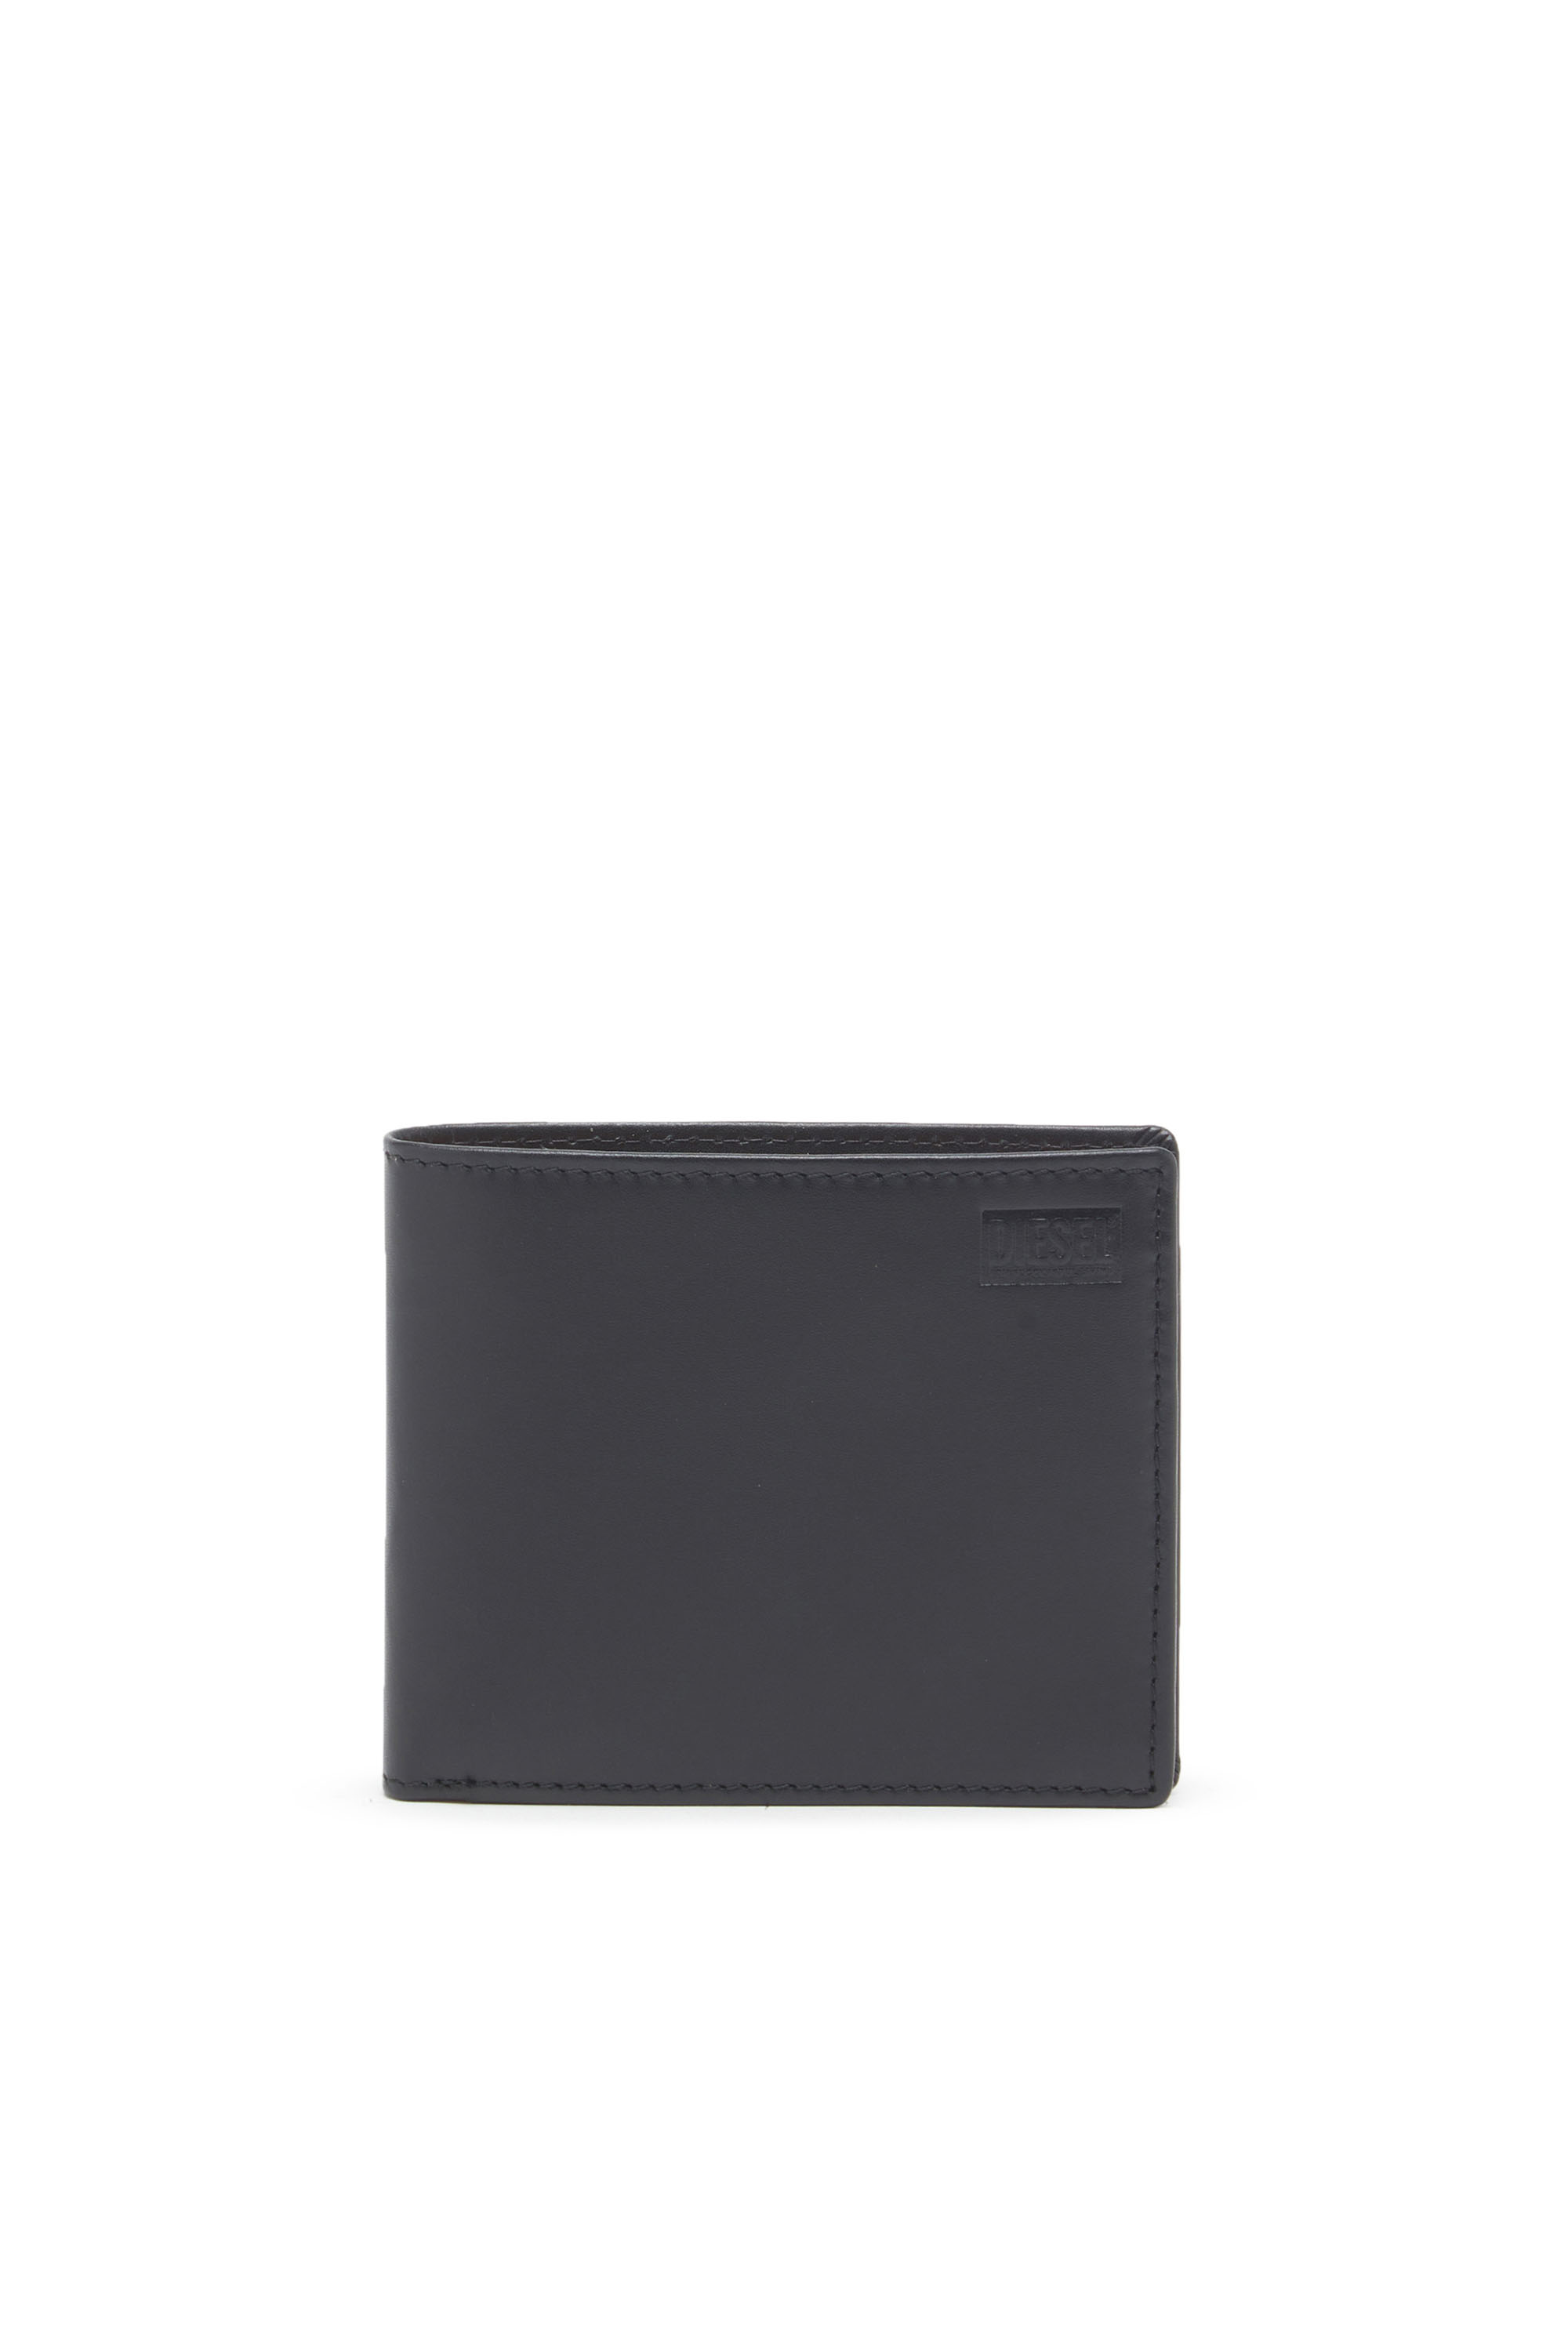 Louis Vuitton [Japan Only] Zippy Wallet Vertical, Black, One Size